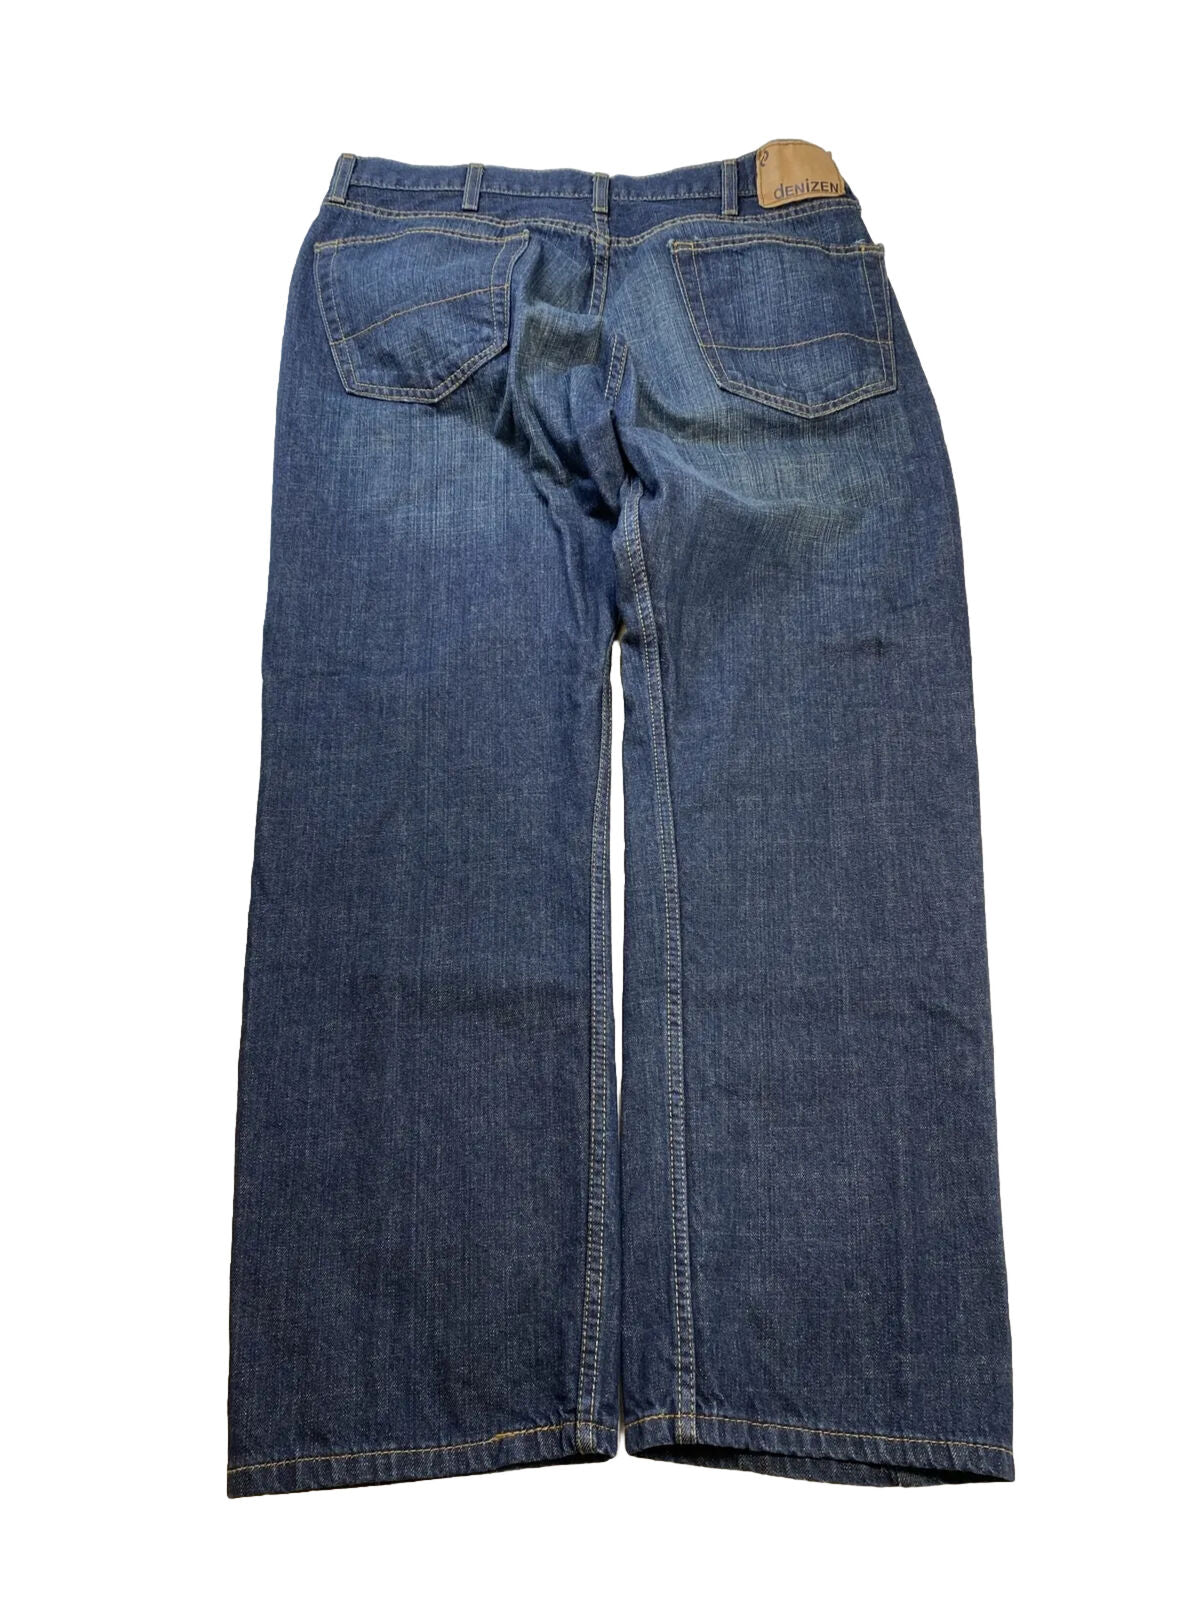 Levi's Denizen Men's Dark Wash 236 Regular Straight Leg Jeans - 38x30